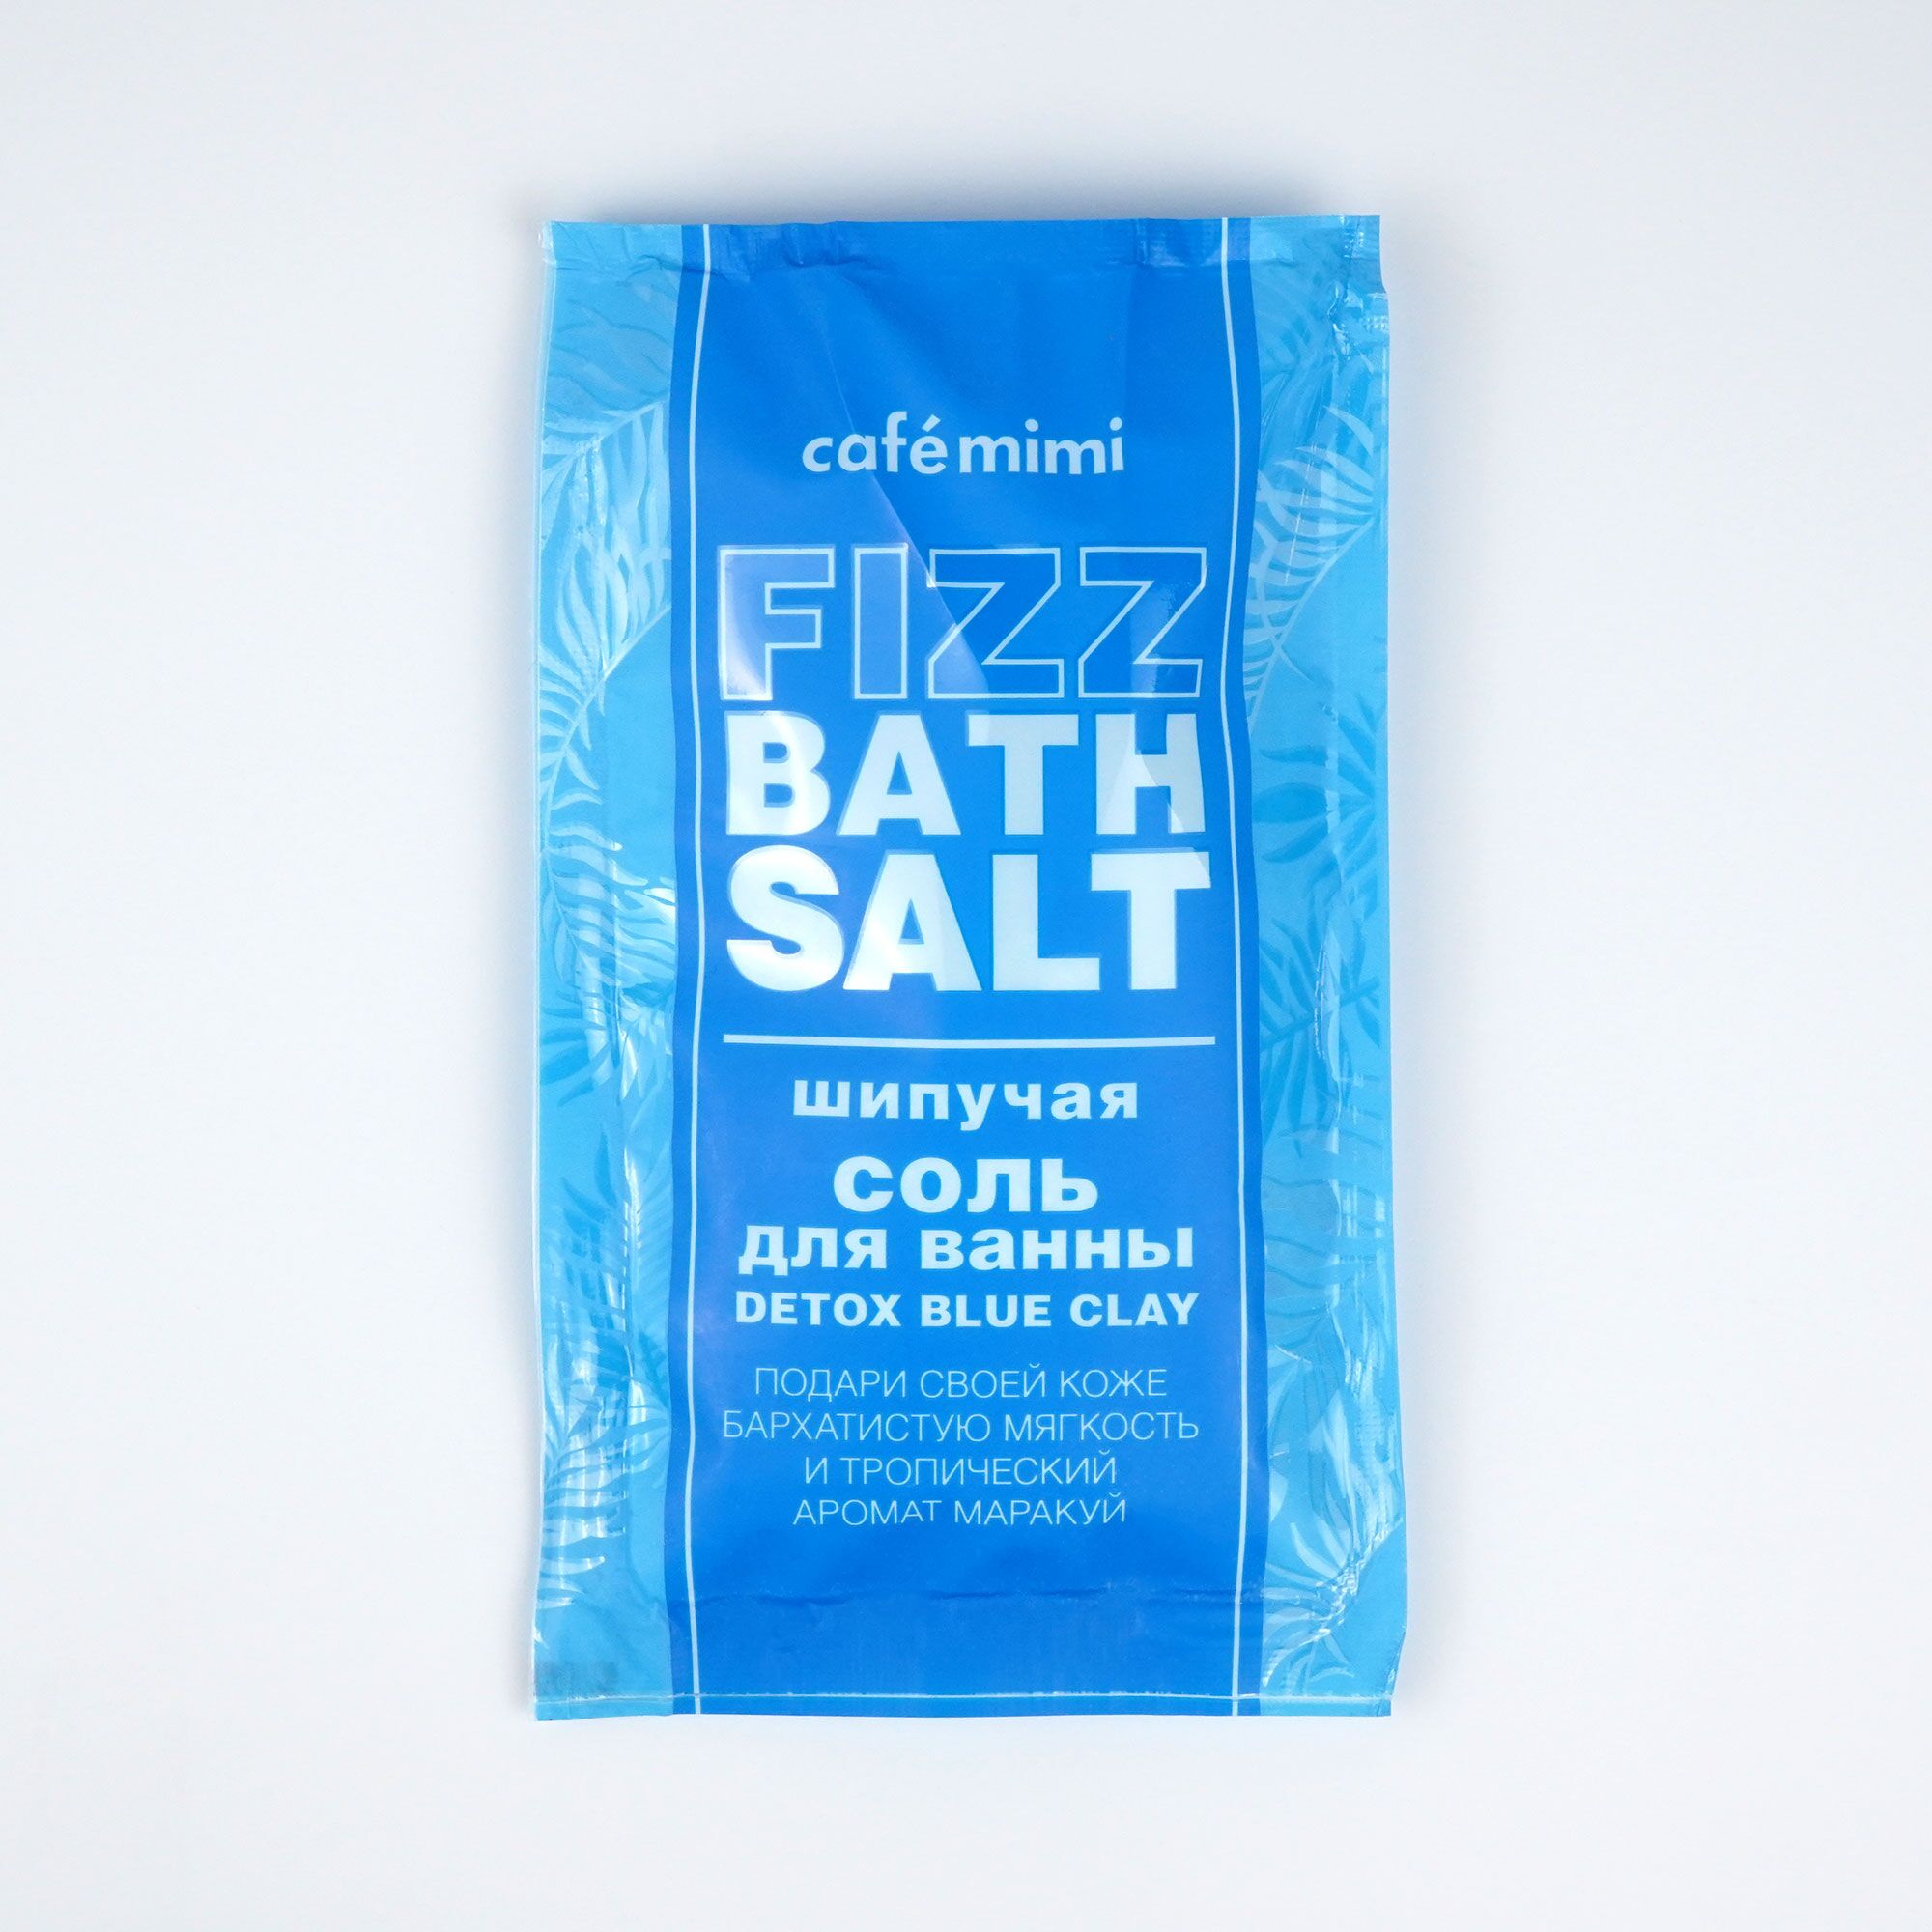 Cafemimi Шипучая соль для ванны DETOX BLUE CLAY